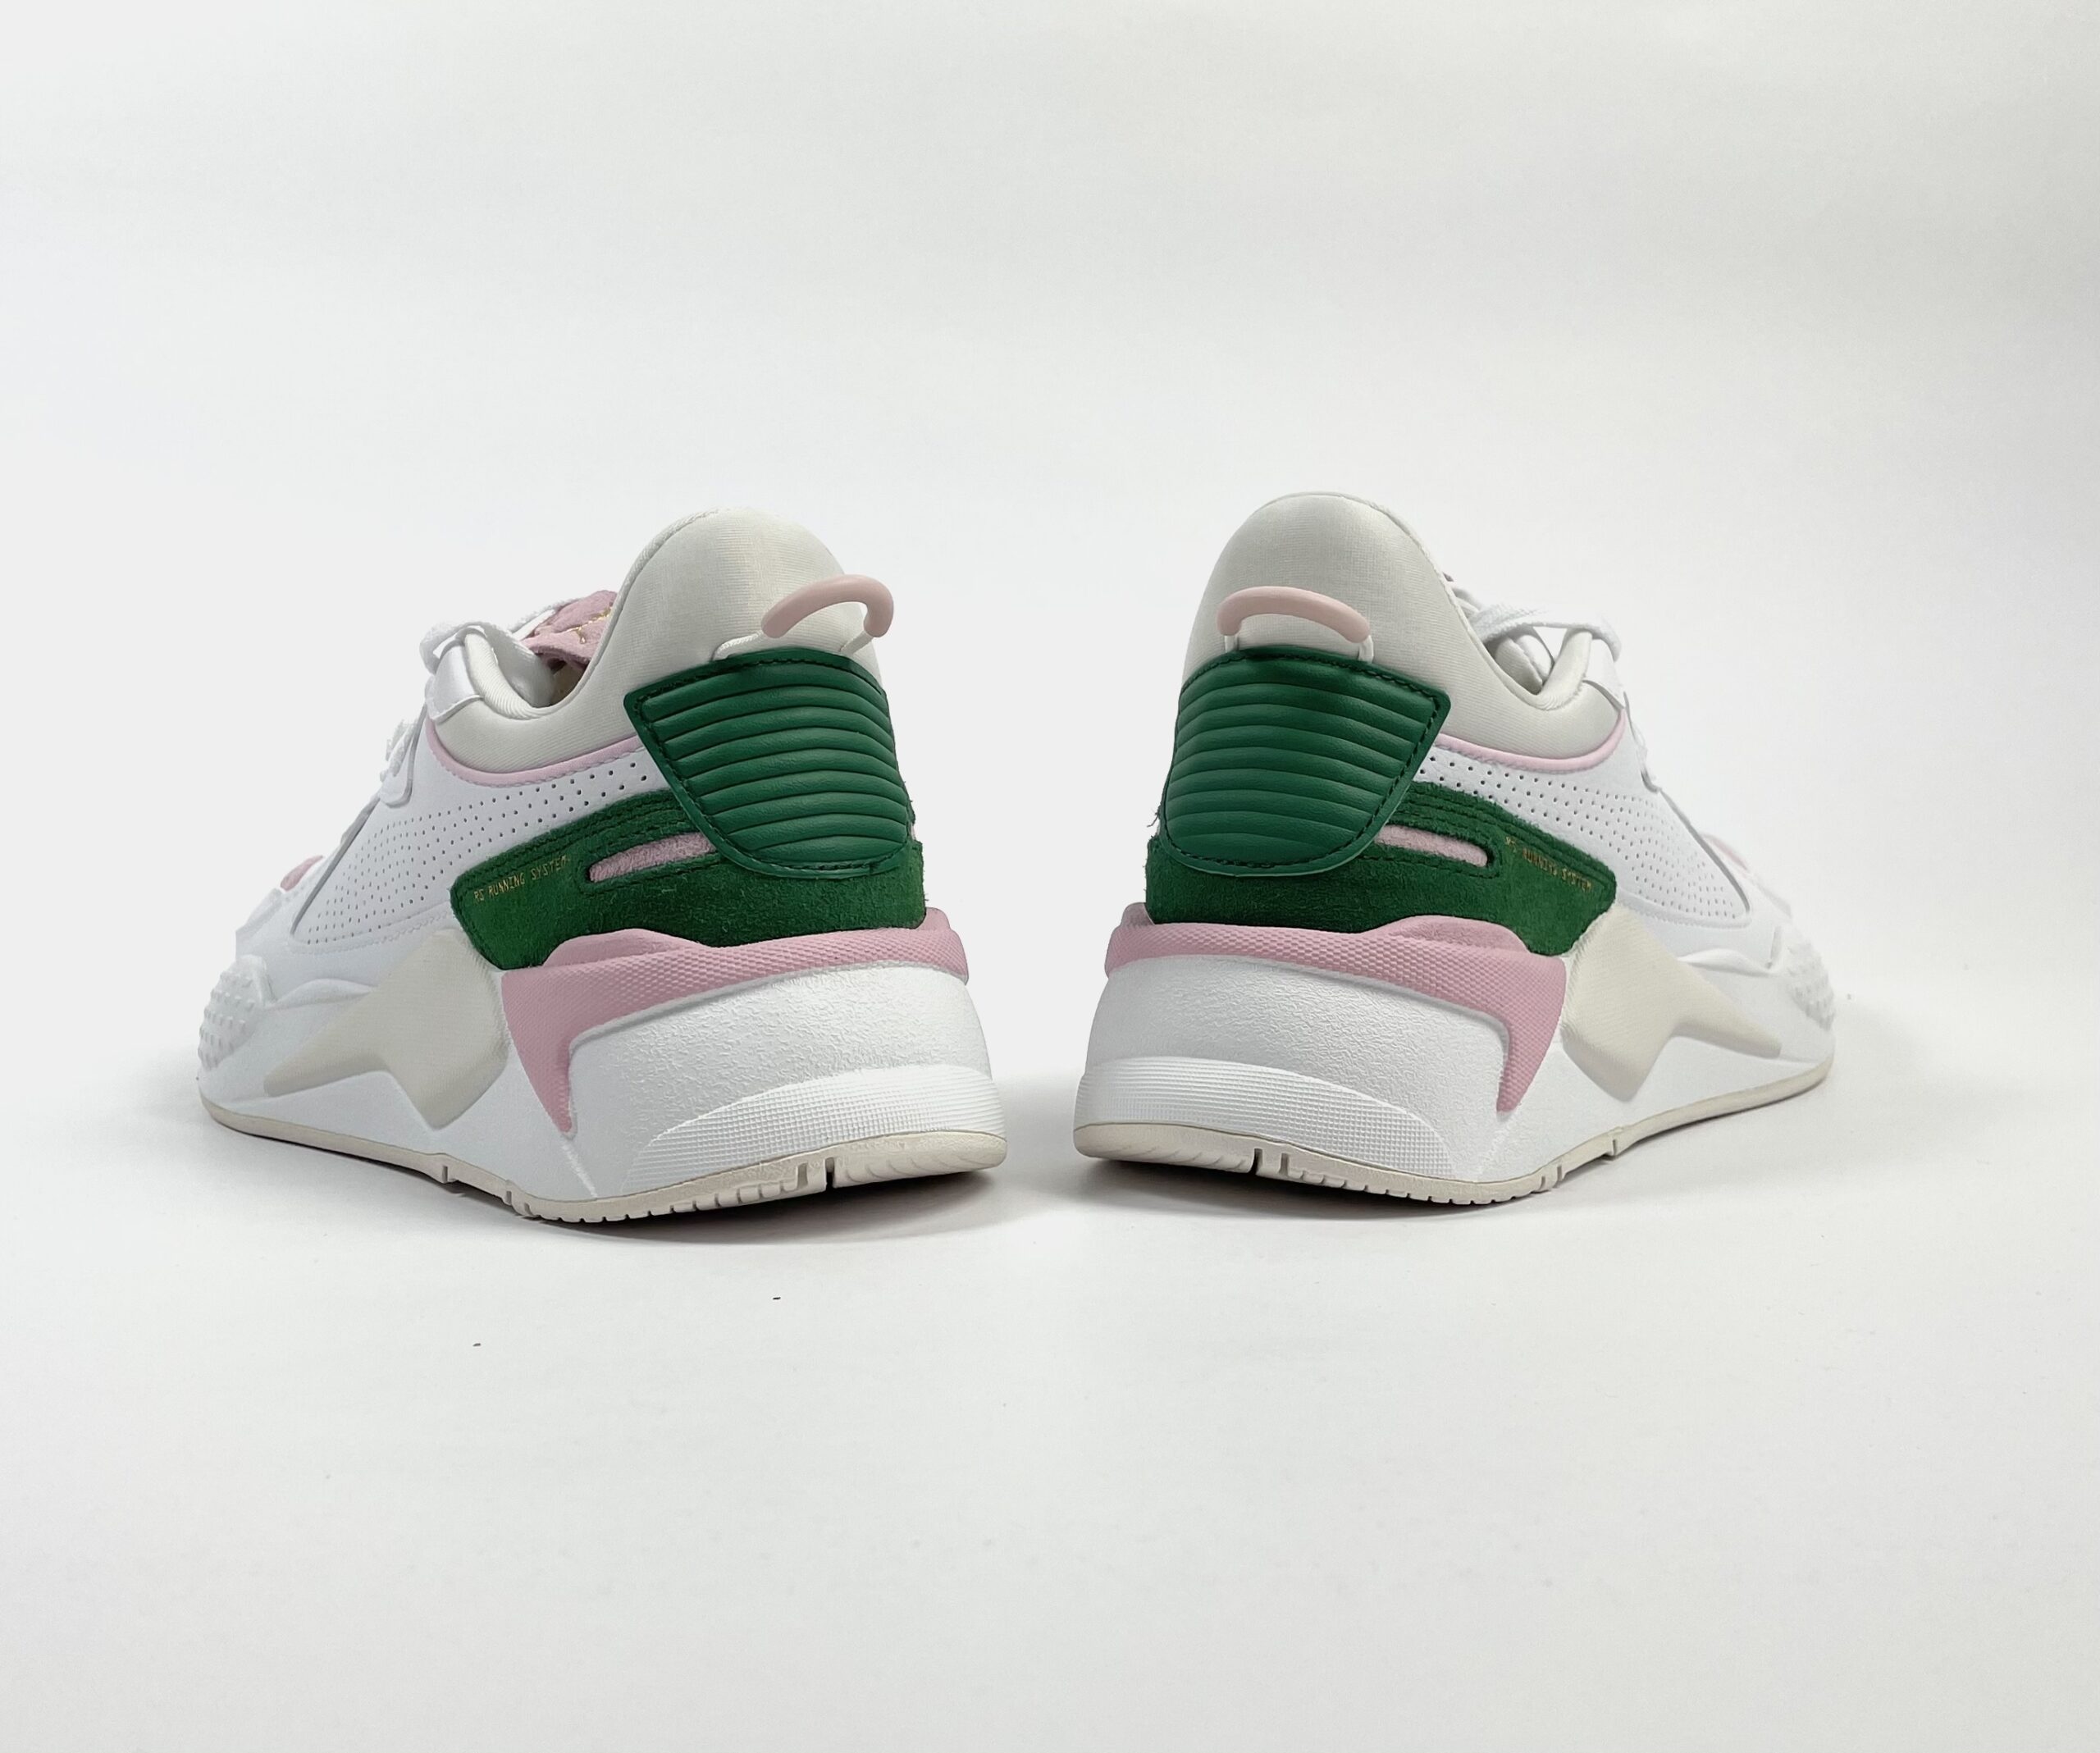 Ashley Furman gordijn Scepticisme Puma RS X Preppy Damen Sneaker (weiß/grün) - meinsportline.de